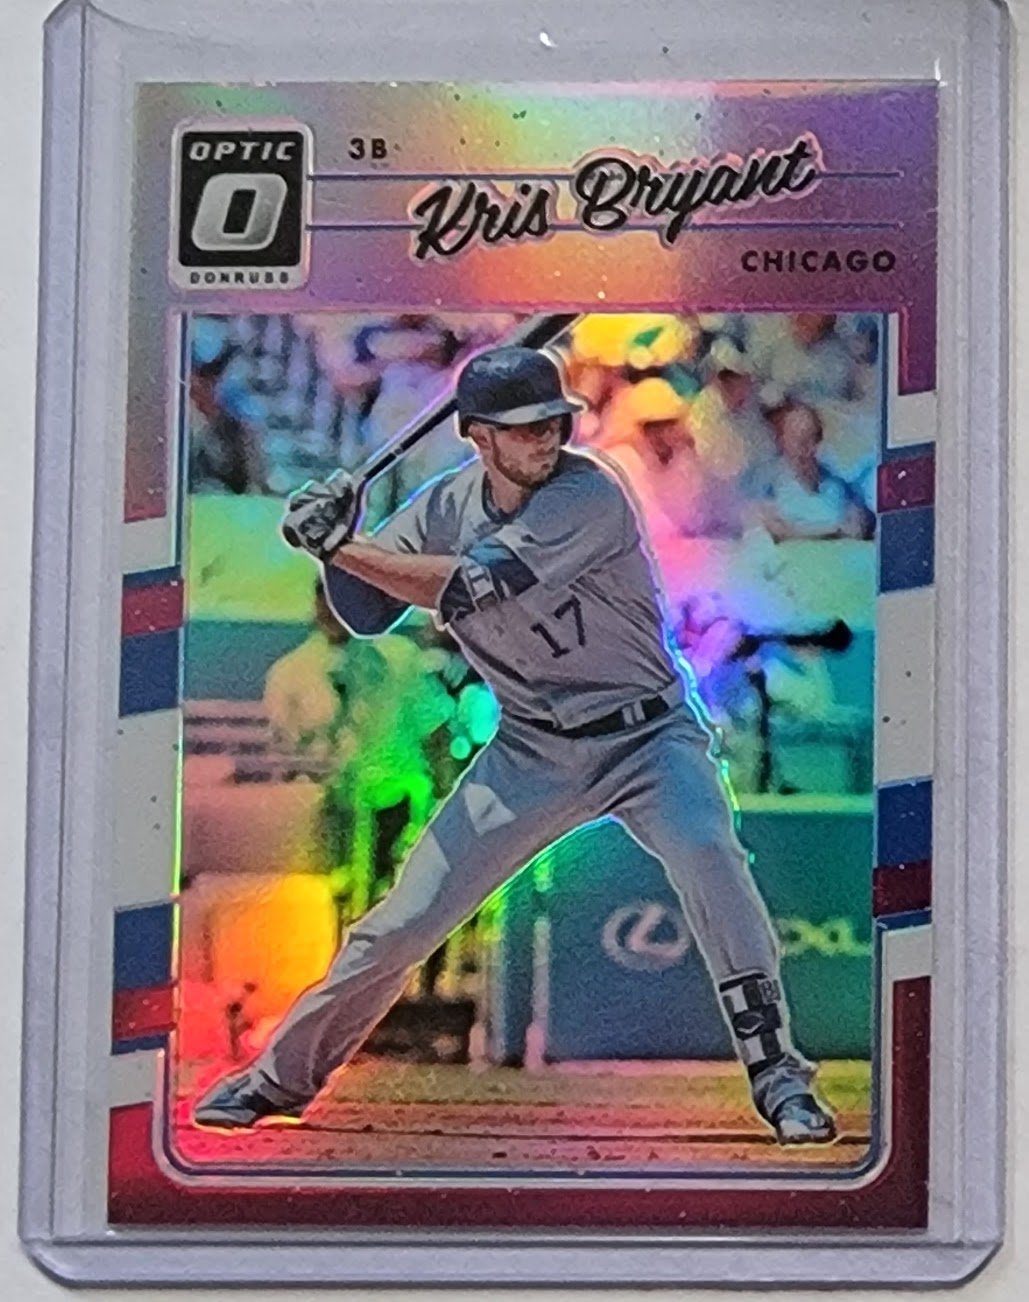 2017 Donruss Optic Kris Bryant Pink Refractor Baseball Card TPTV simple Xclusive Collectibles   